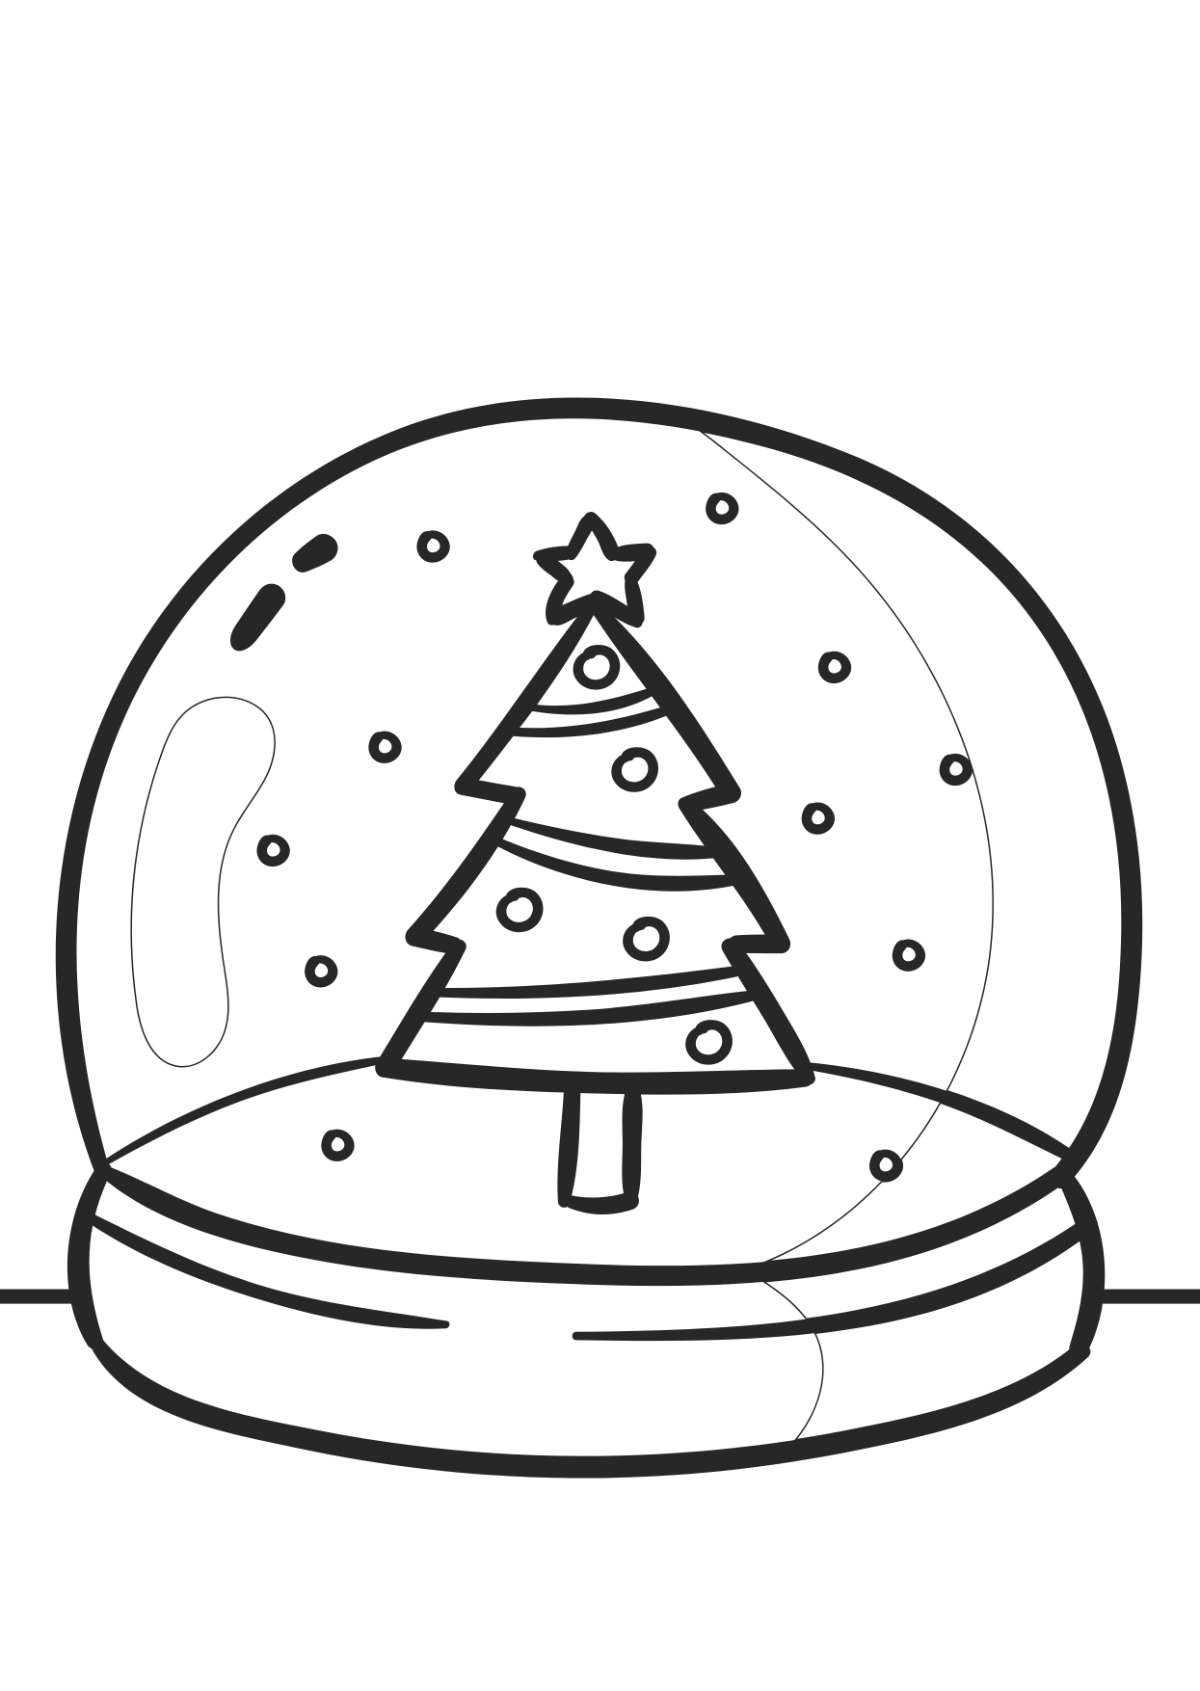 Christmas Tree Drawing: an Easy, Cute Cartoon - Drawings Of...